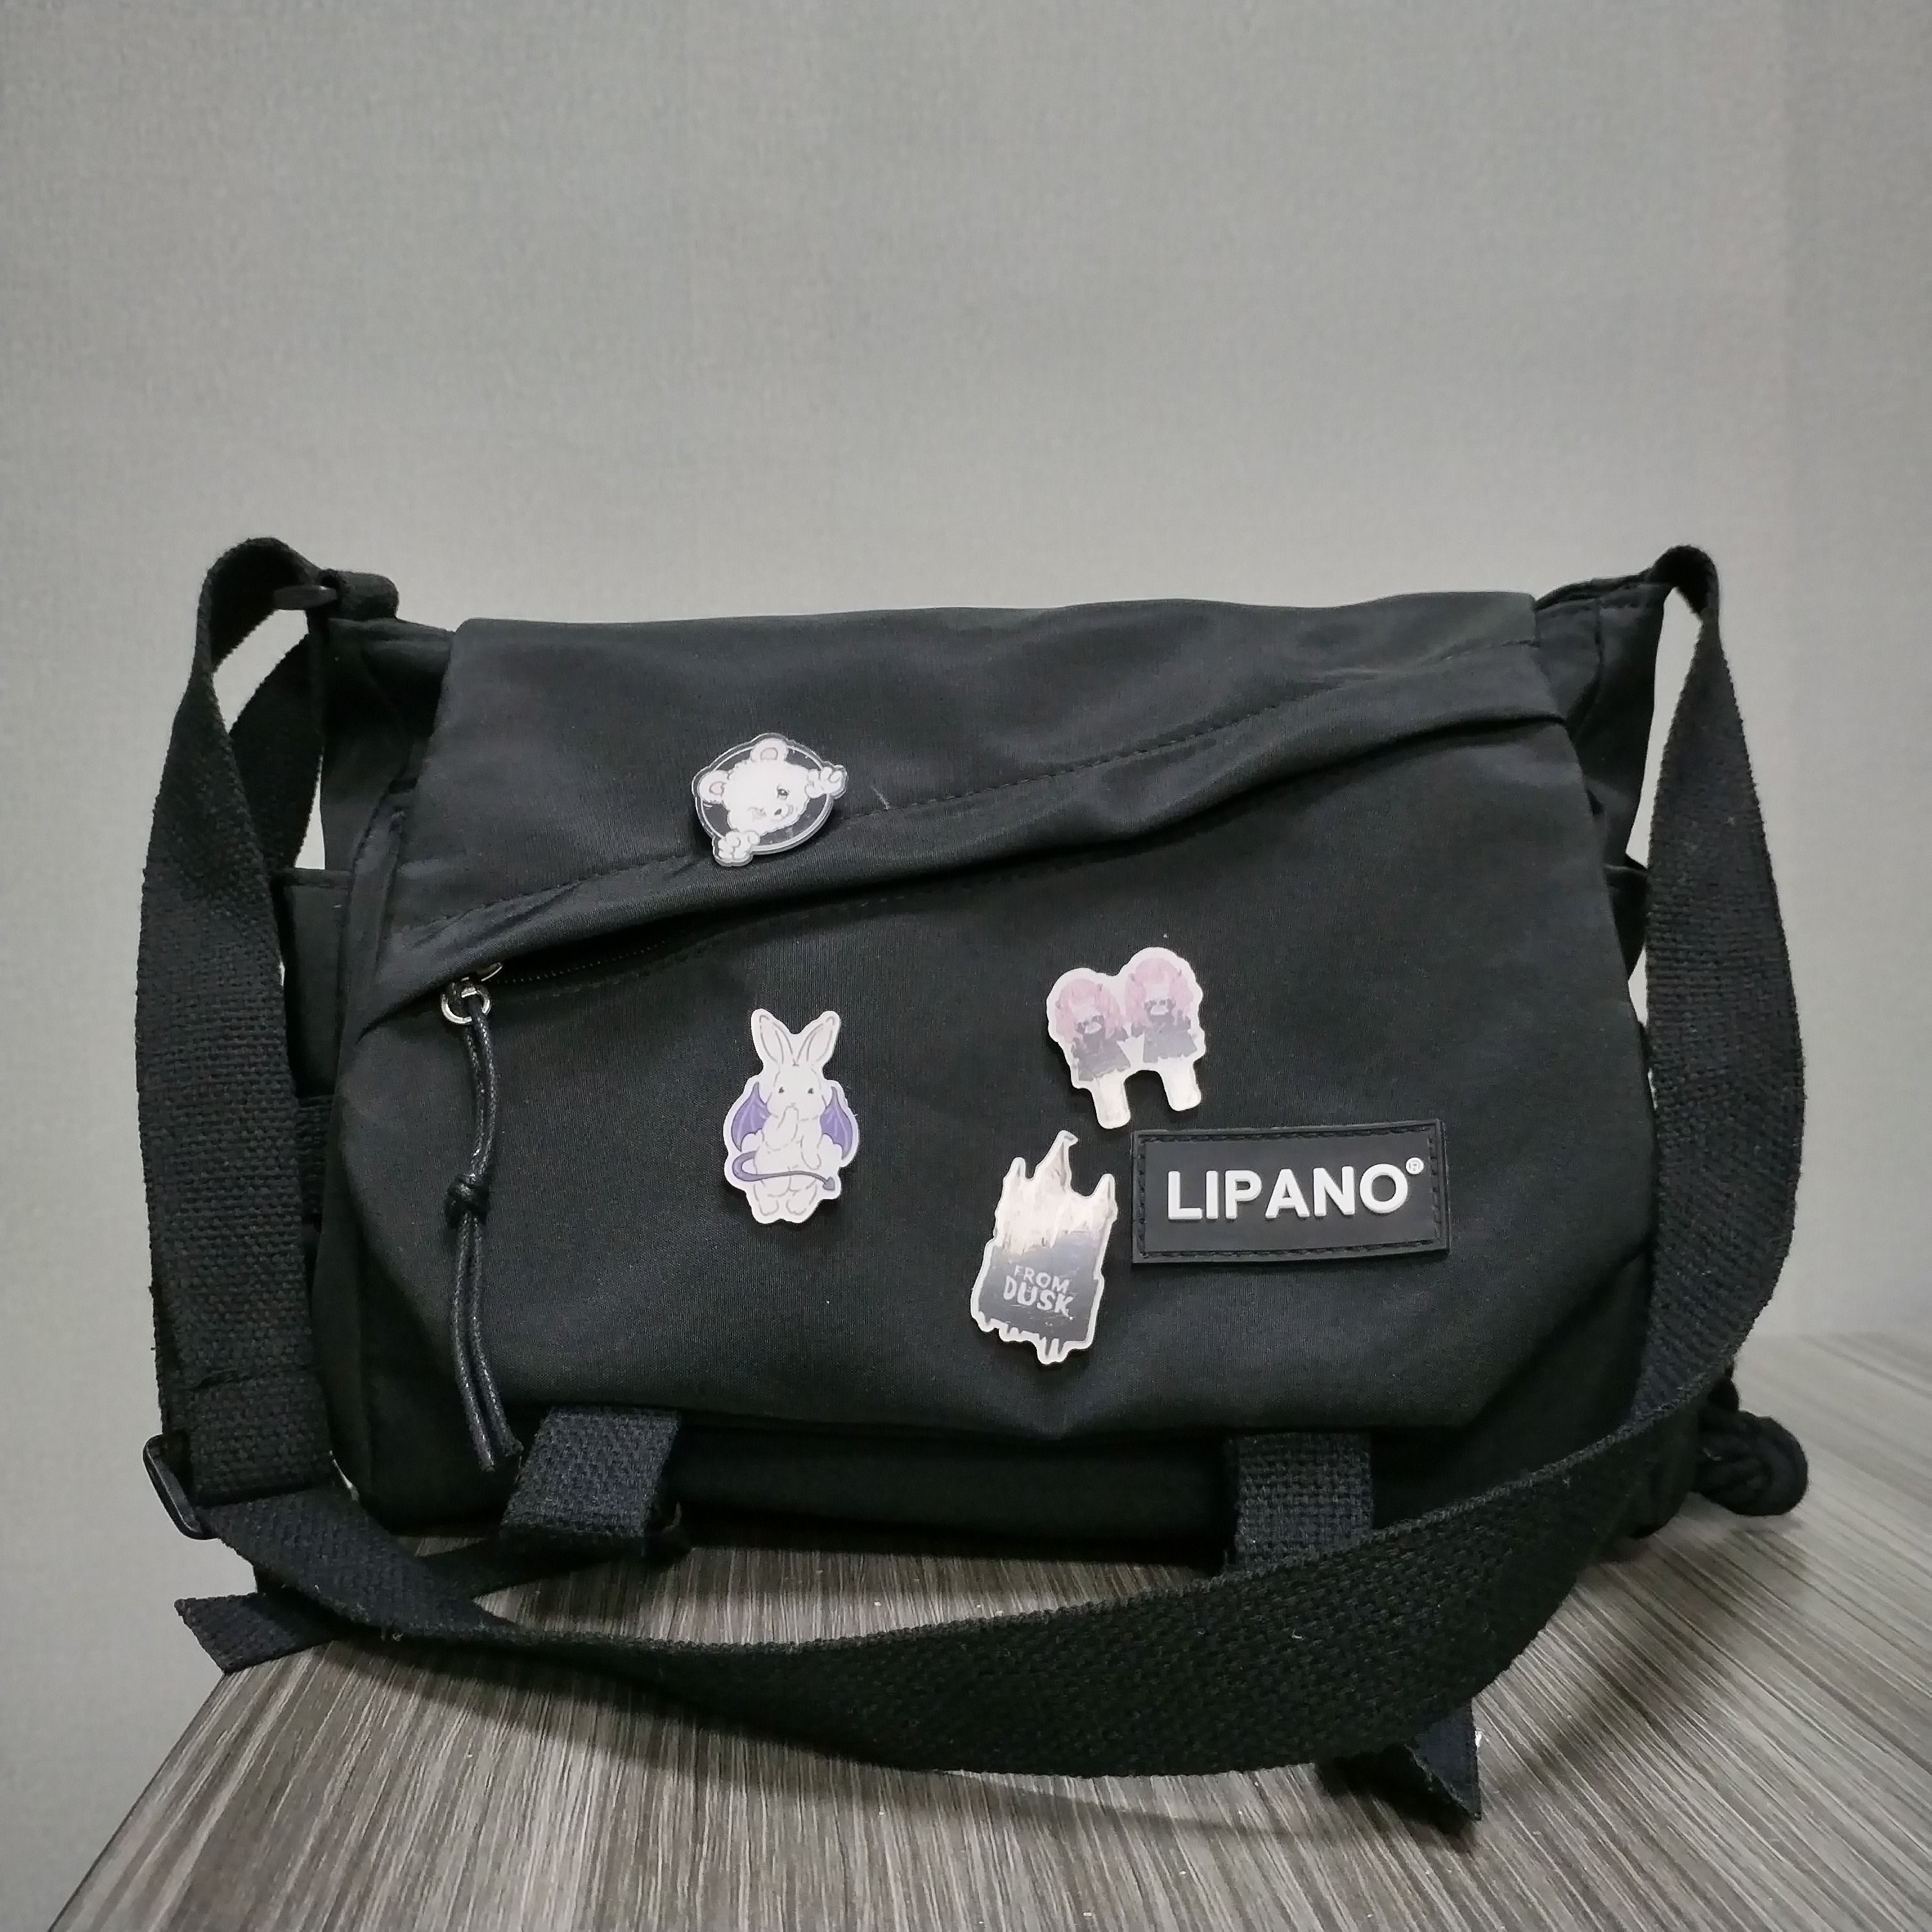 Nylon Handbag Shoulder Bag Large Capacity Messenger Bag, Men's